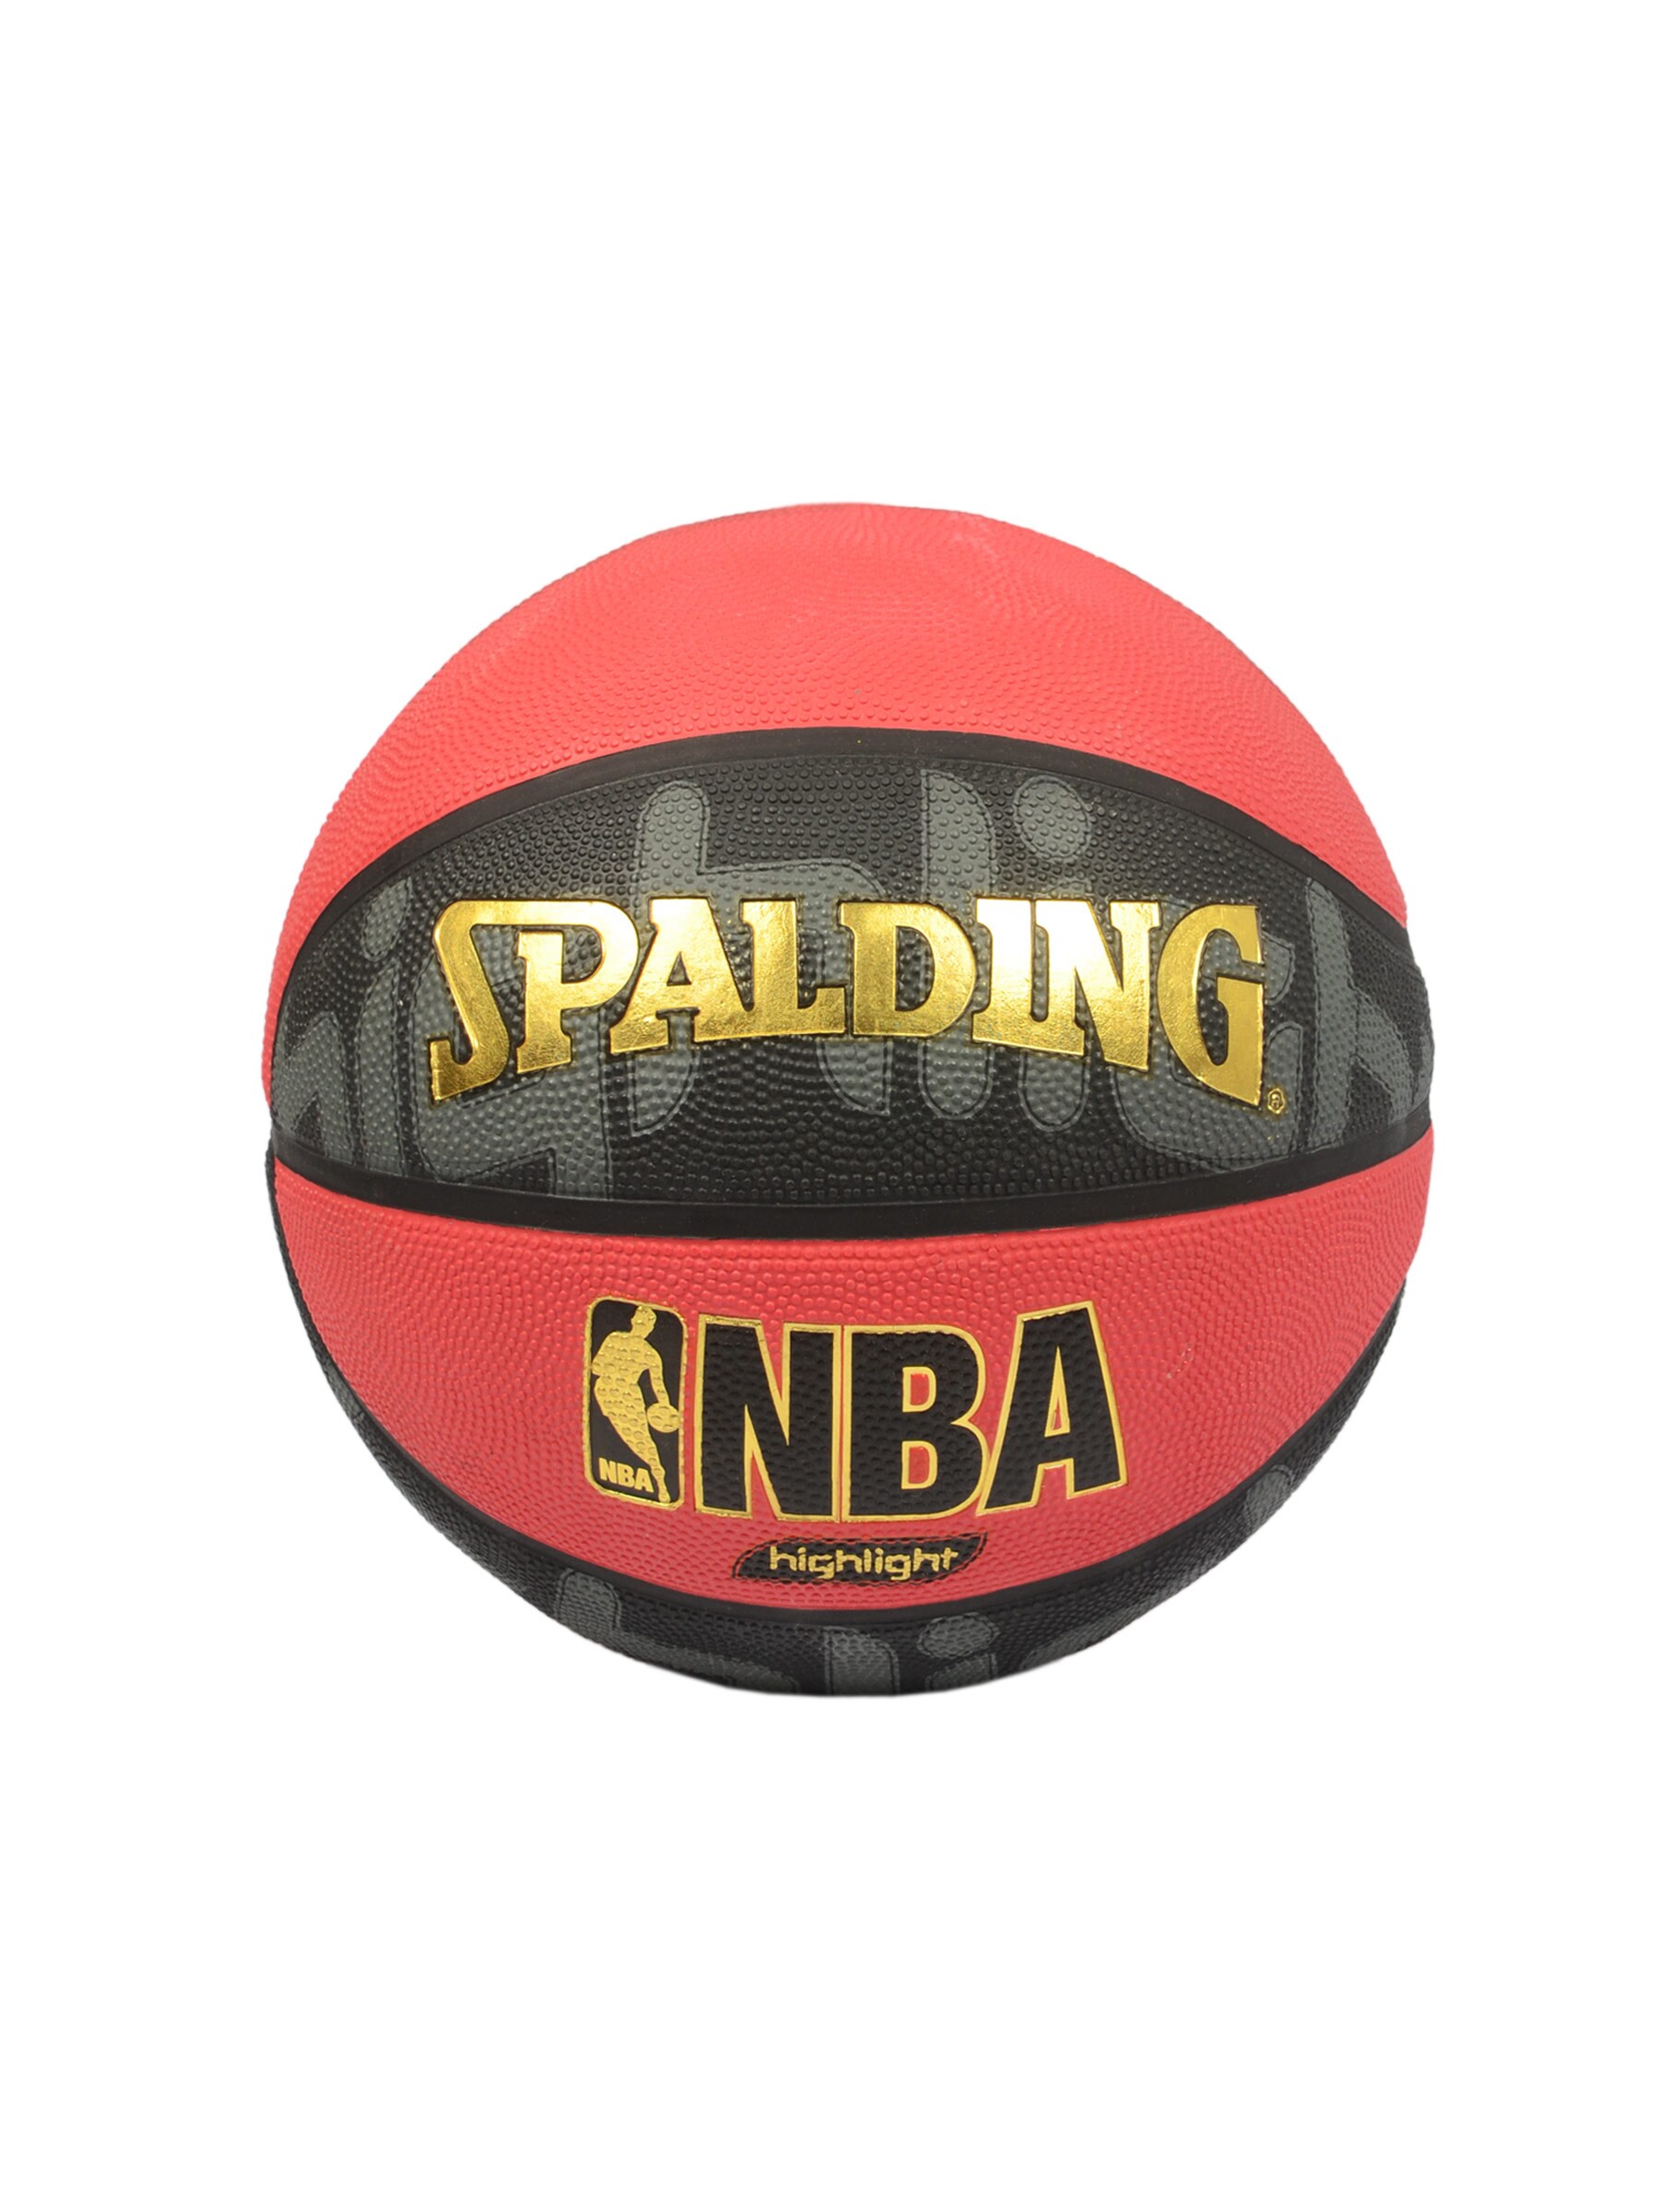 Spalding Unisex NBA Highlight Red Basketballs